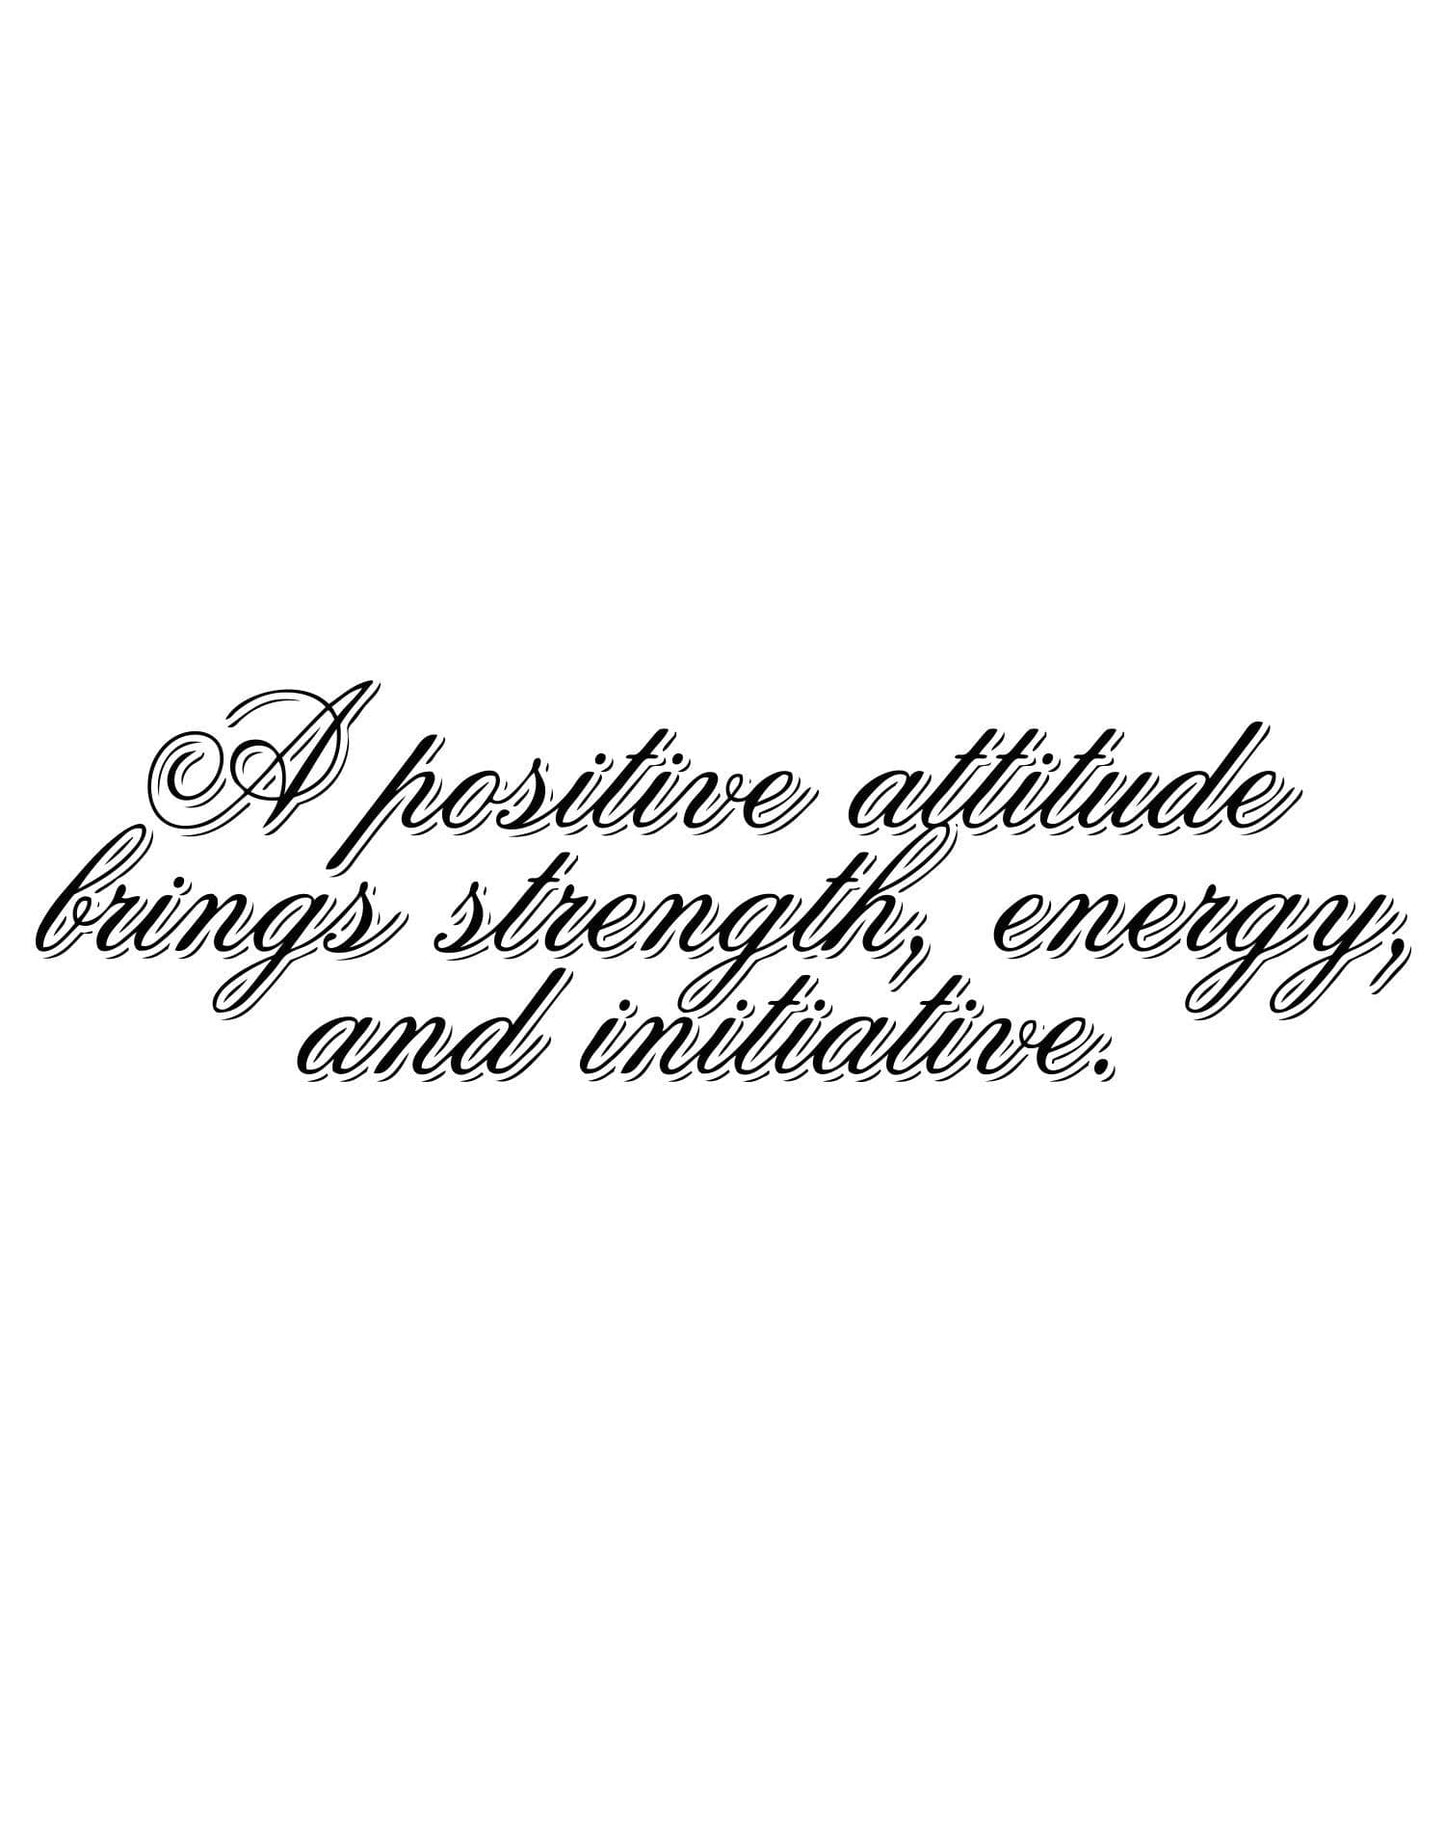 positive attitude quotes